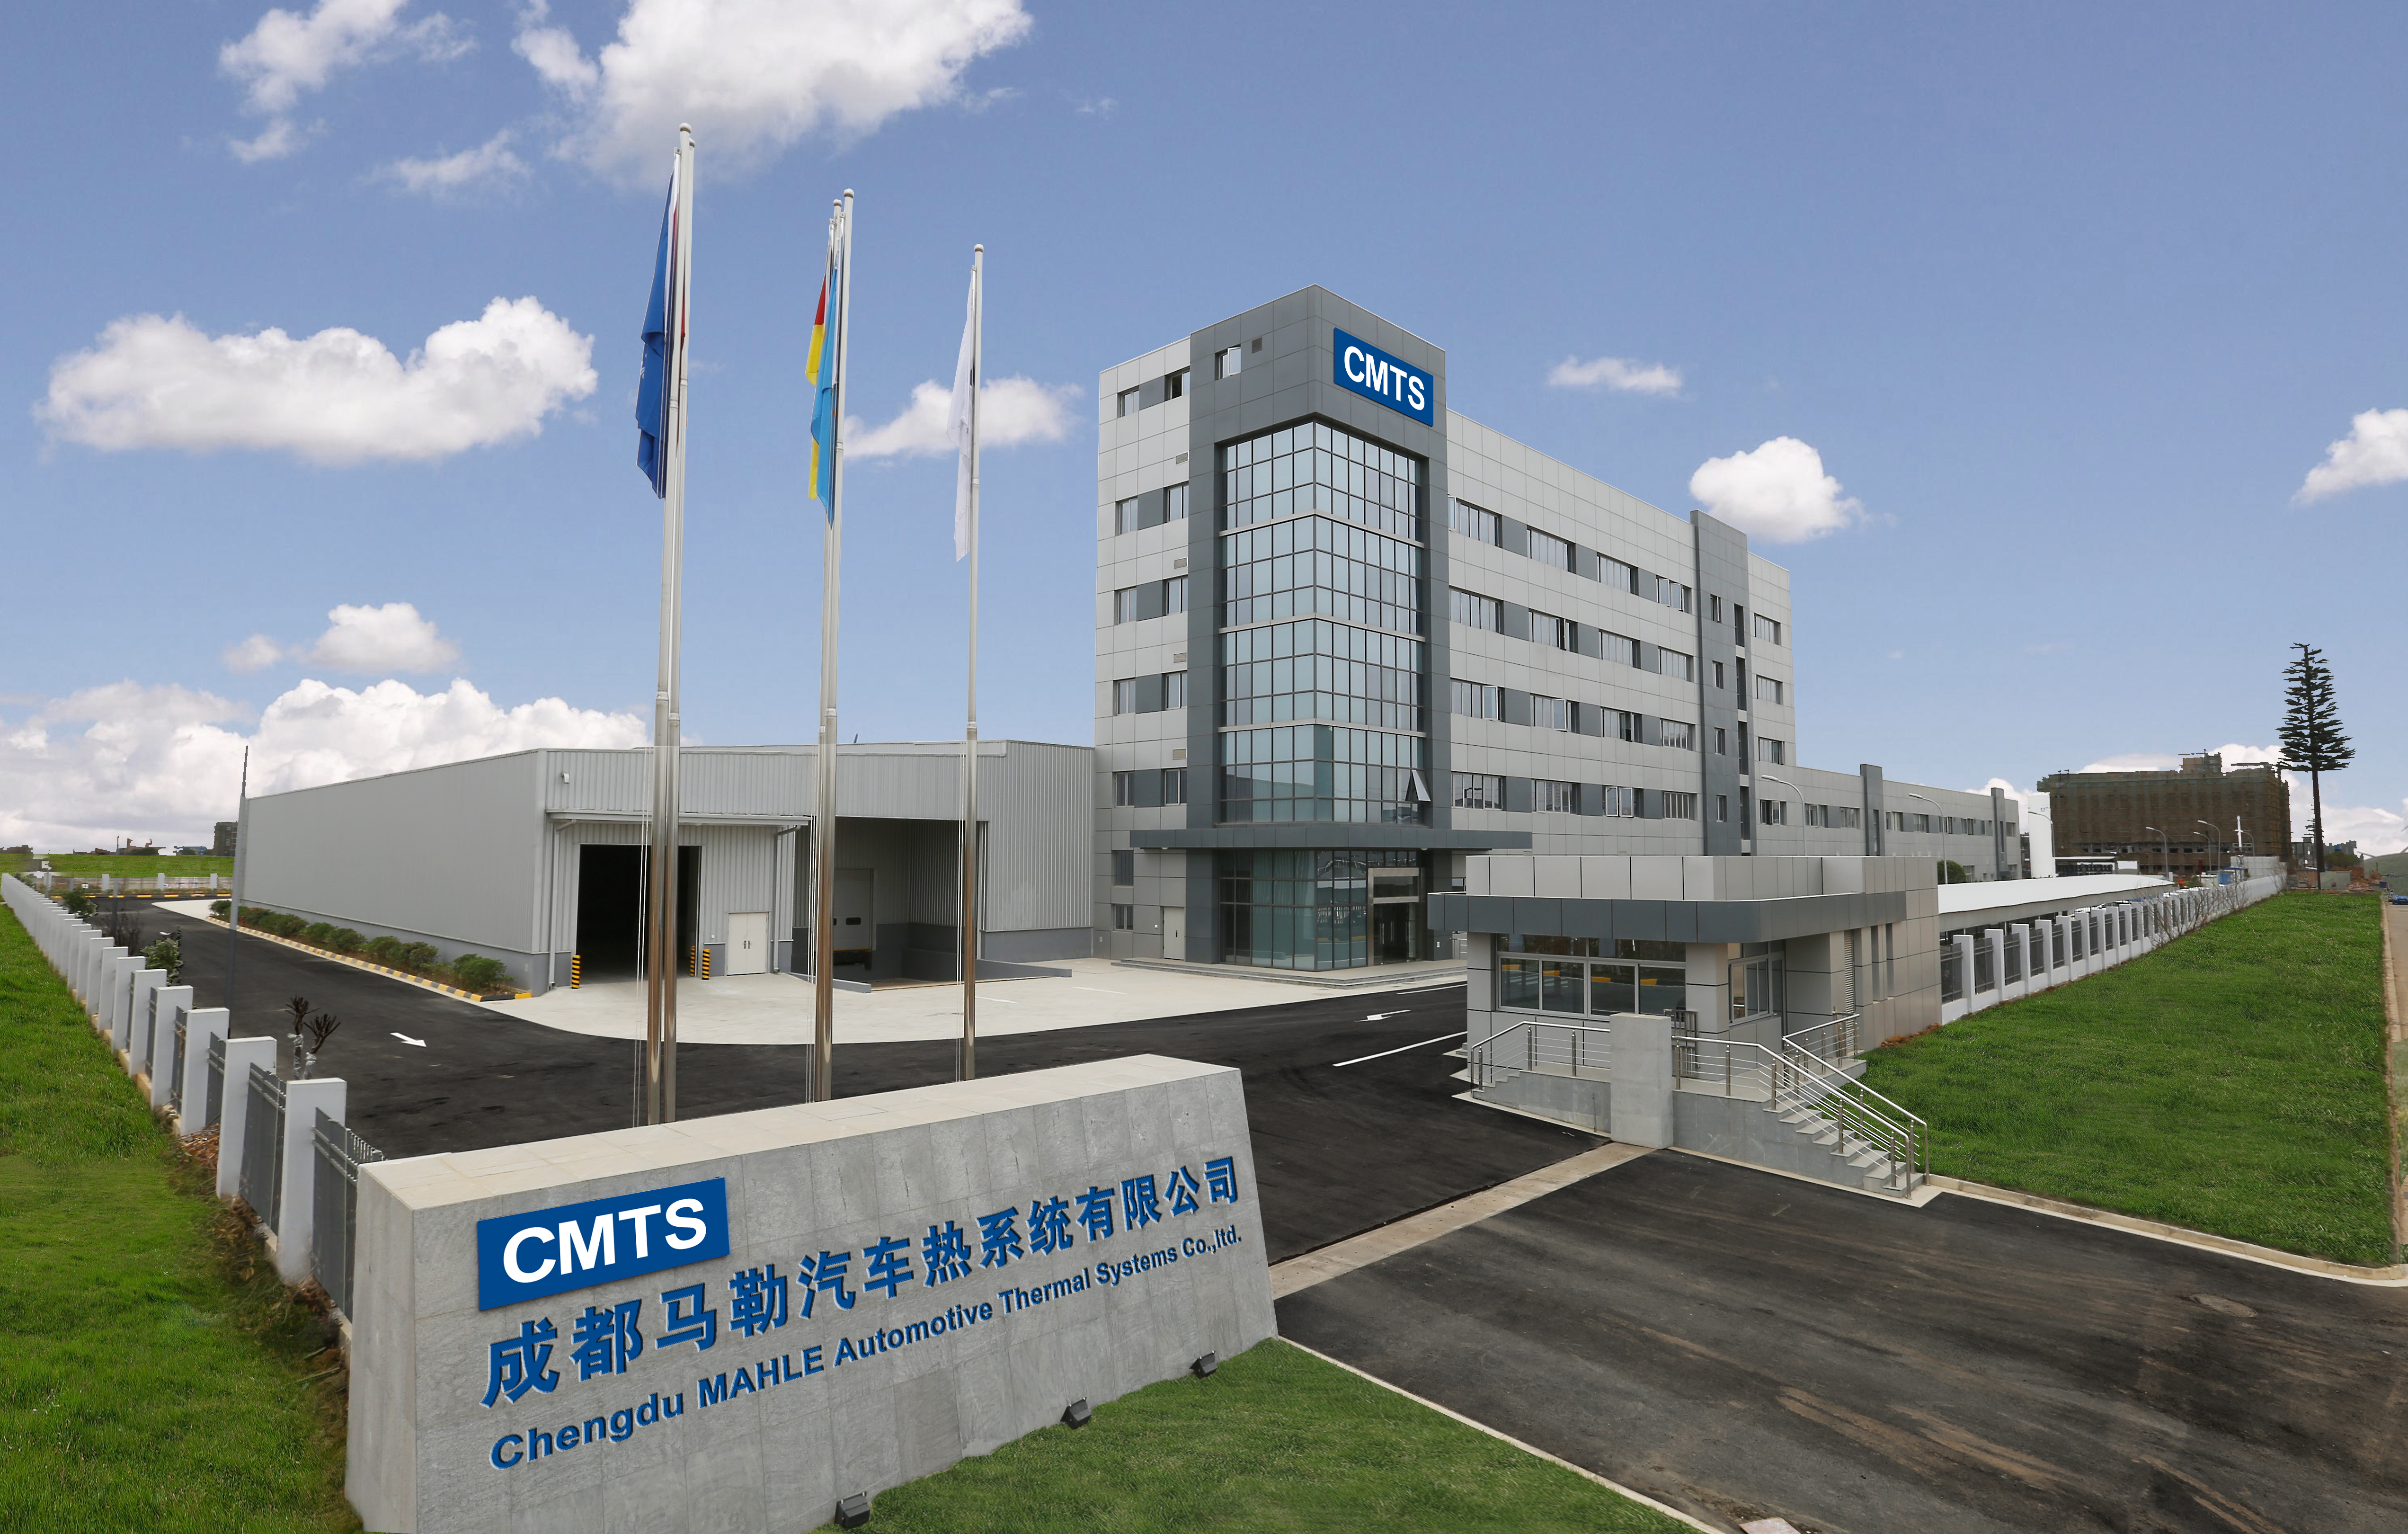 Chengdu MAHLE Automotive Thermal Systems Co., Ltd., Chengdu